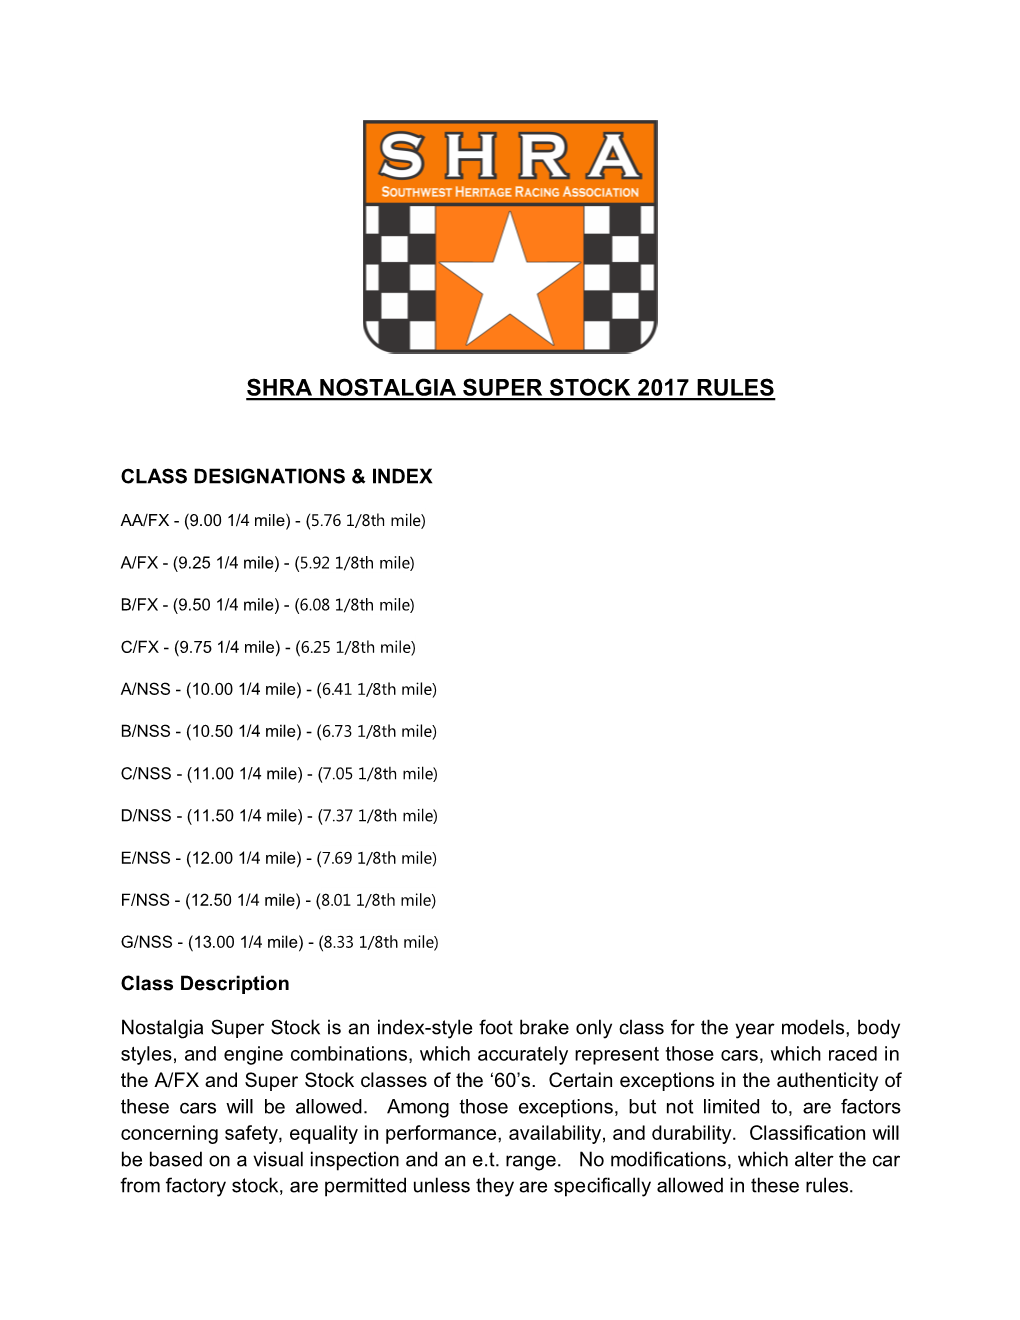 Shra Nostalgia Super Stock 2017 Rules